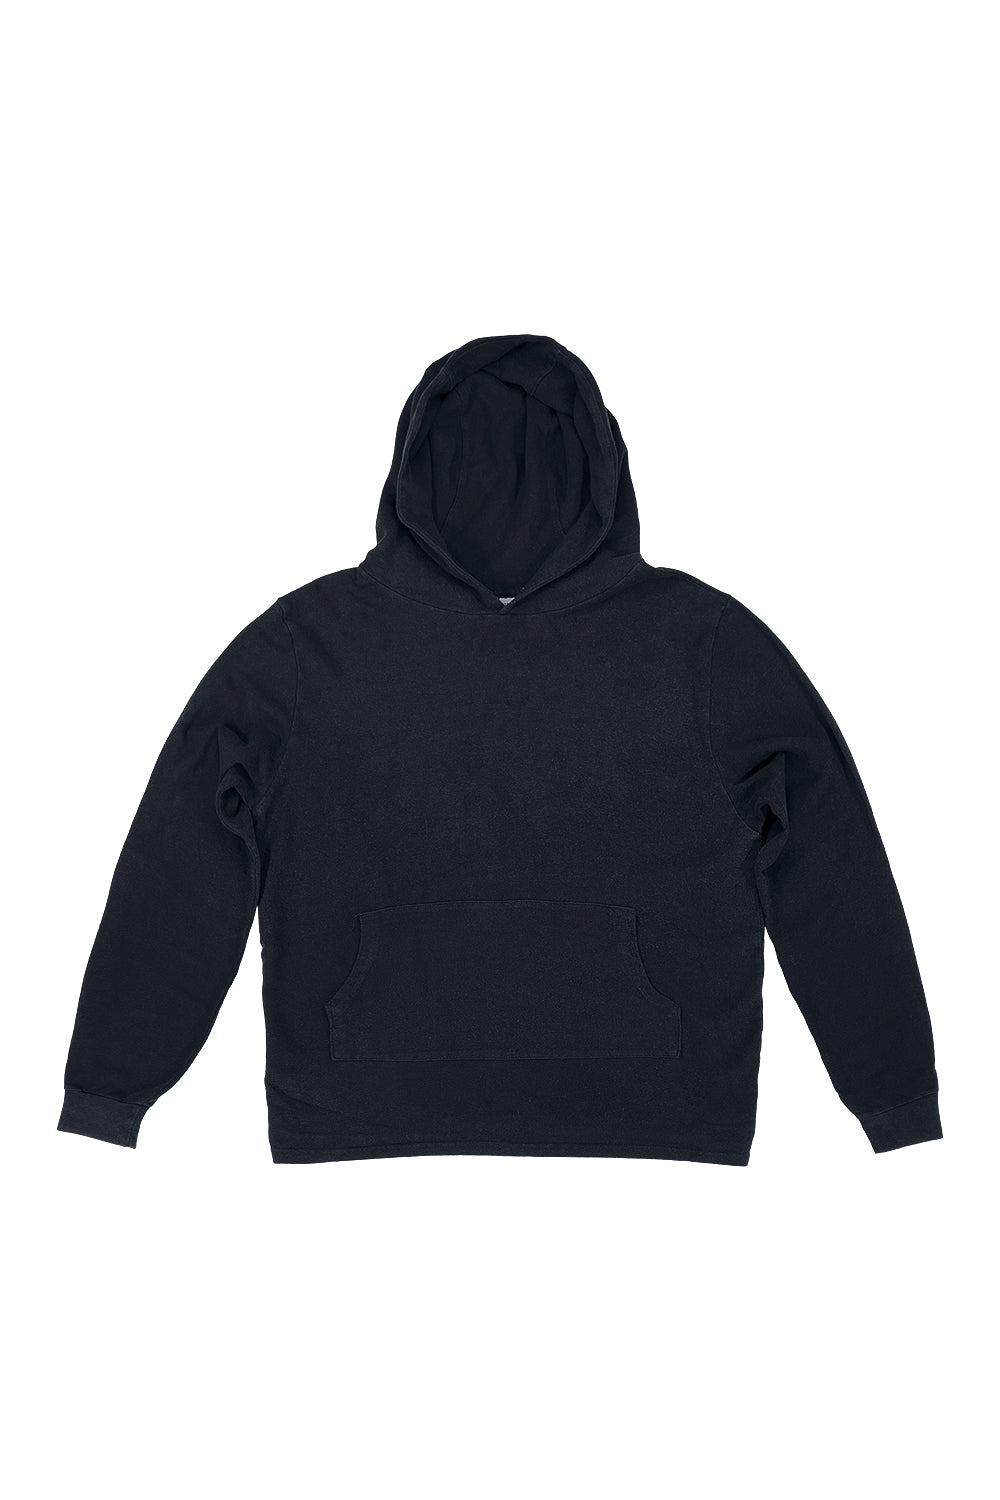 Santa Cruz Hooded Long Sleeve | Jungmaven Hemp Clothing & Accessories / Color: Black